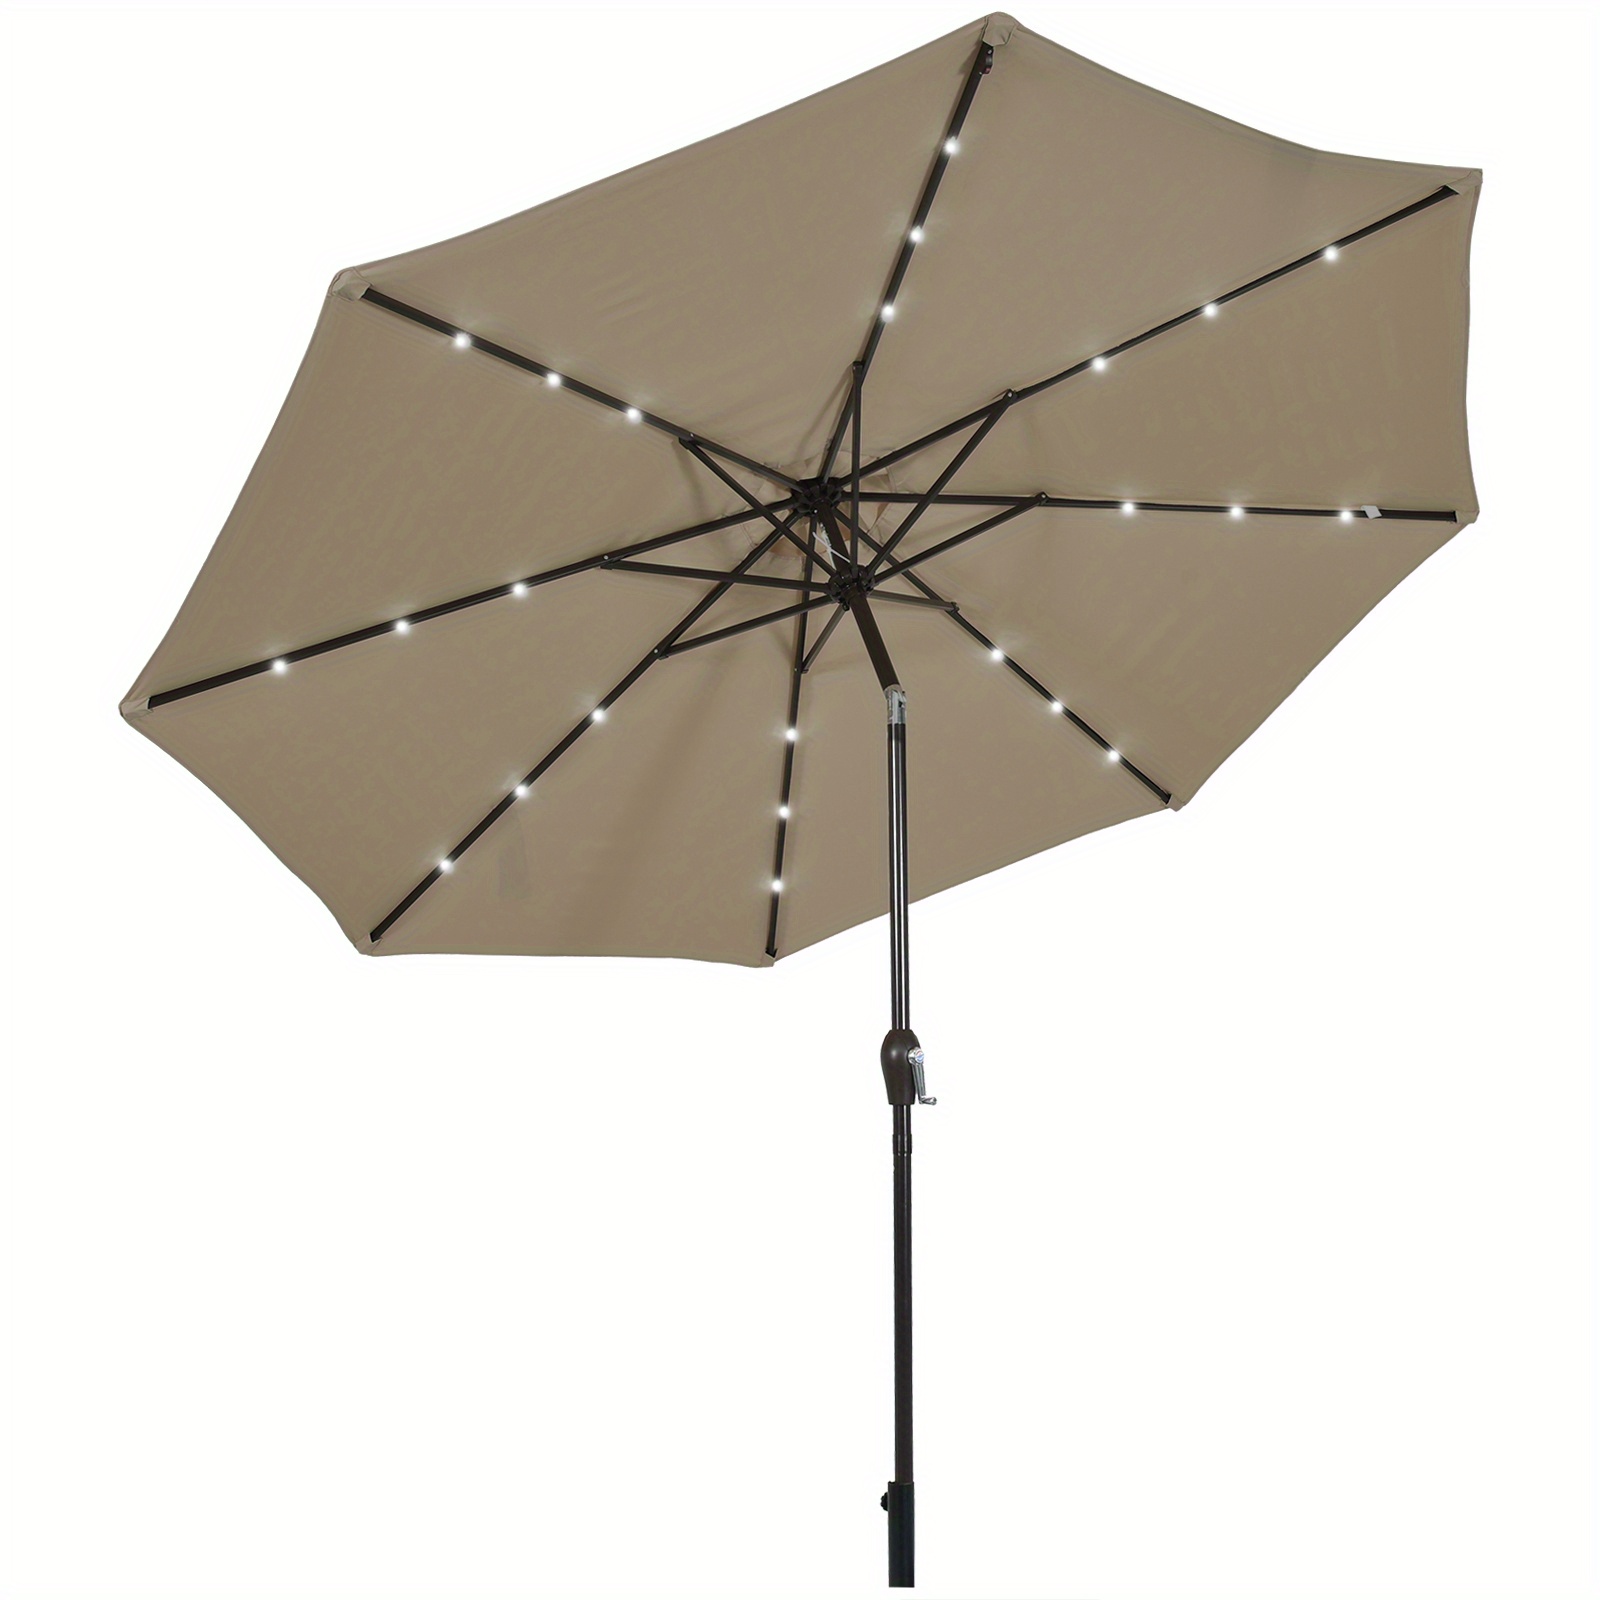 

Lifezeal 10' Solar Led Lighted Patio Market Umbrella Tilt Adjustment Crank Tan